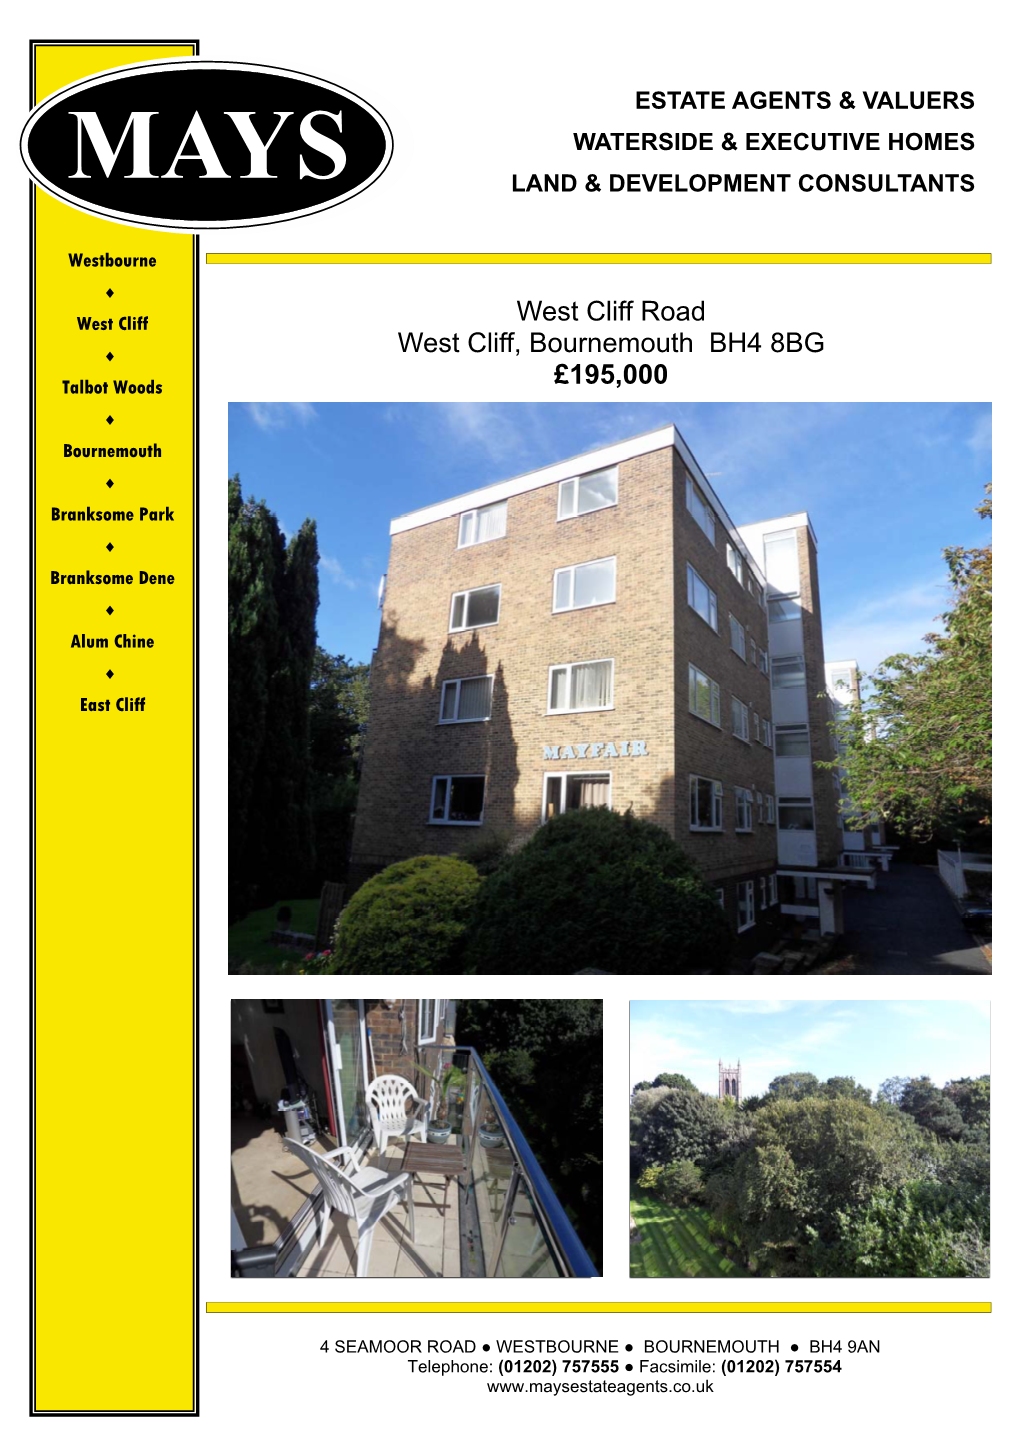 West Cliff Road West Cliff, Bournemouth BH4 8BG £195,000